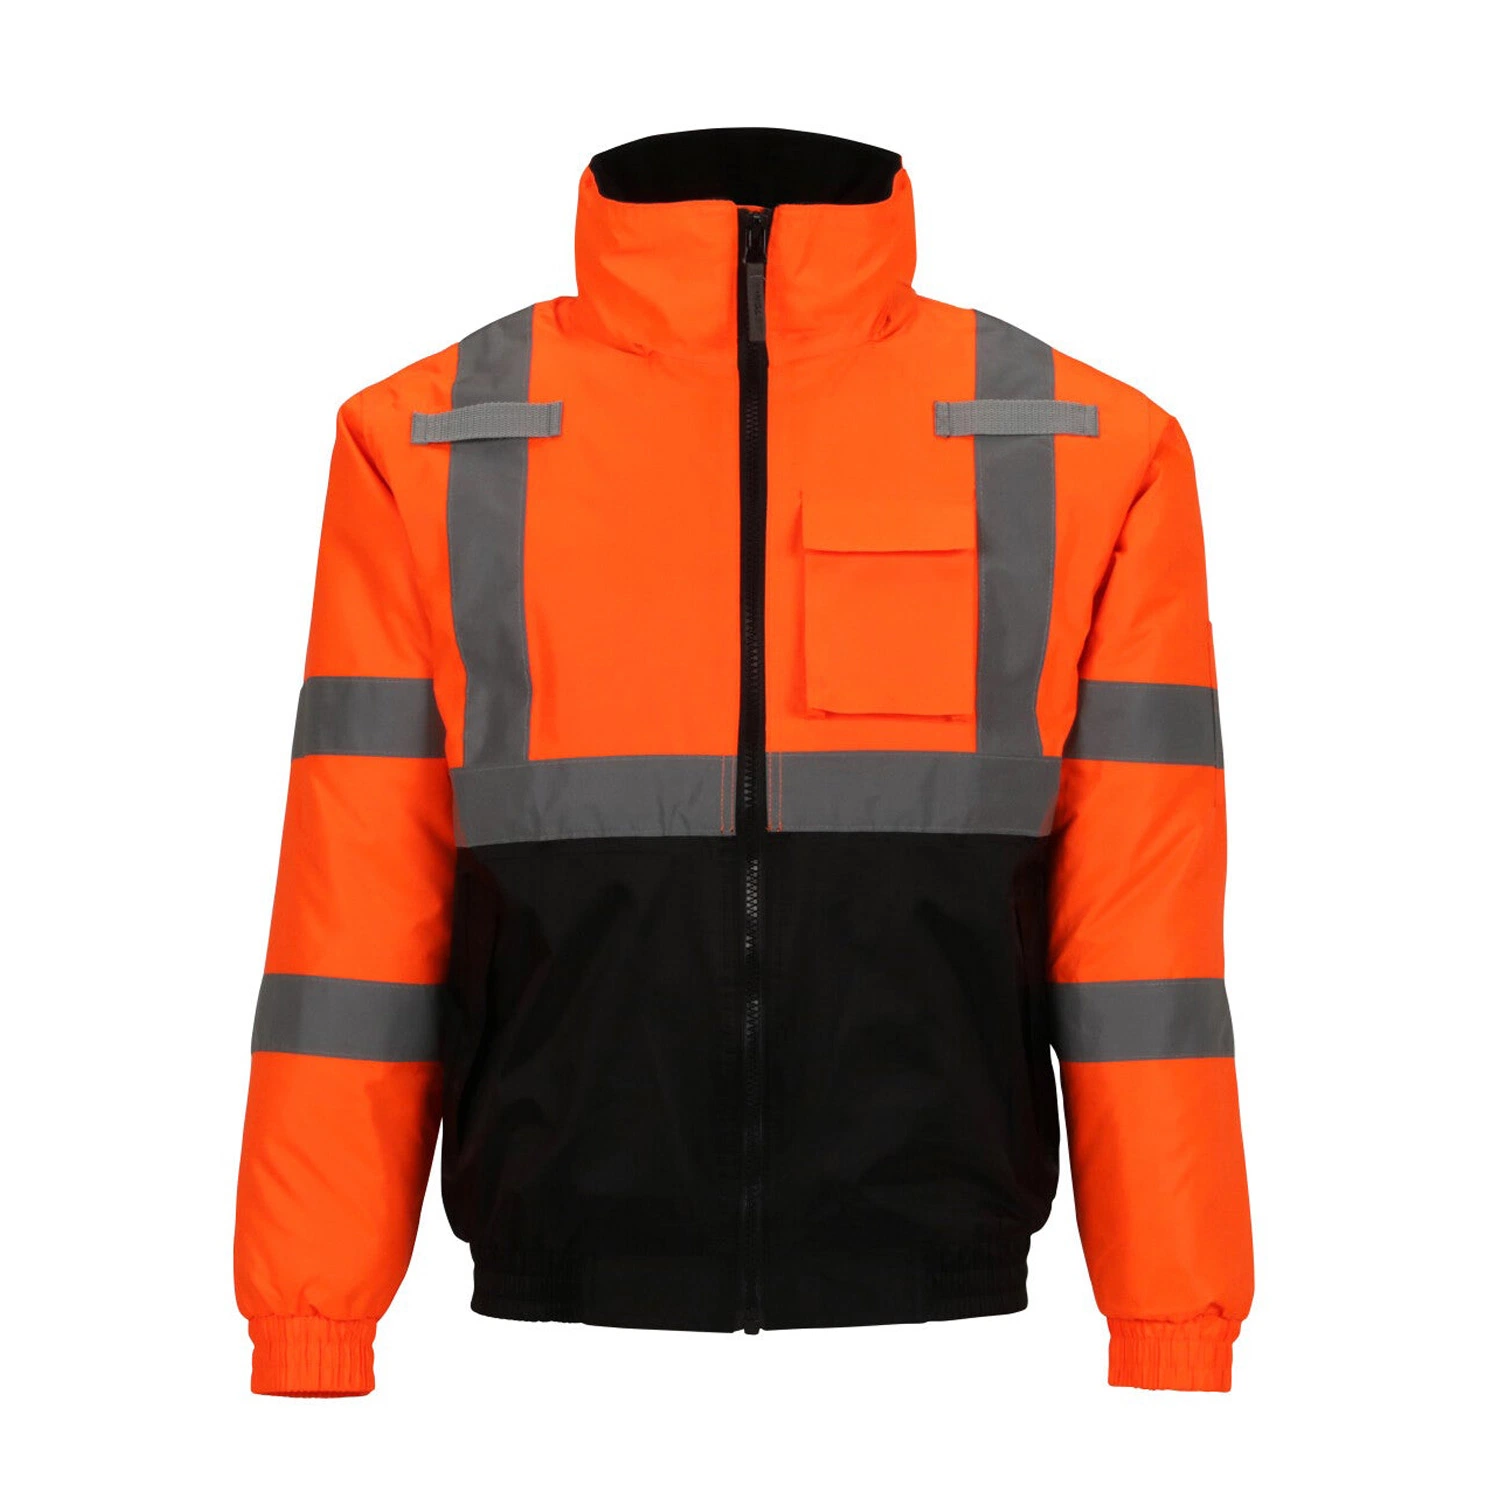 Safety Reflective Jackets High Visibility Waterproof Roadway Safety Clothing Workwear Jacket